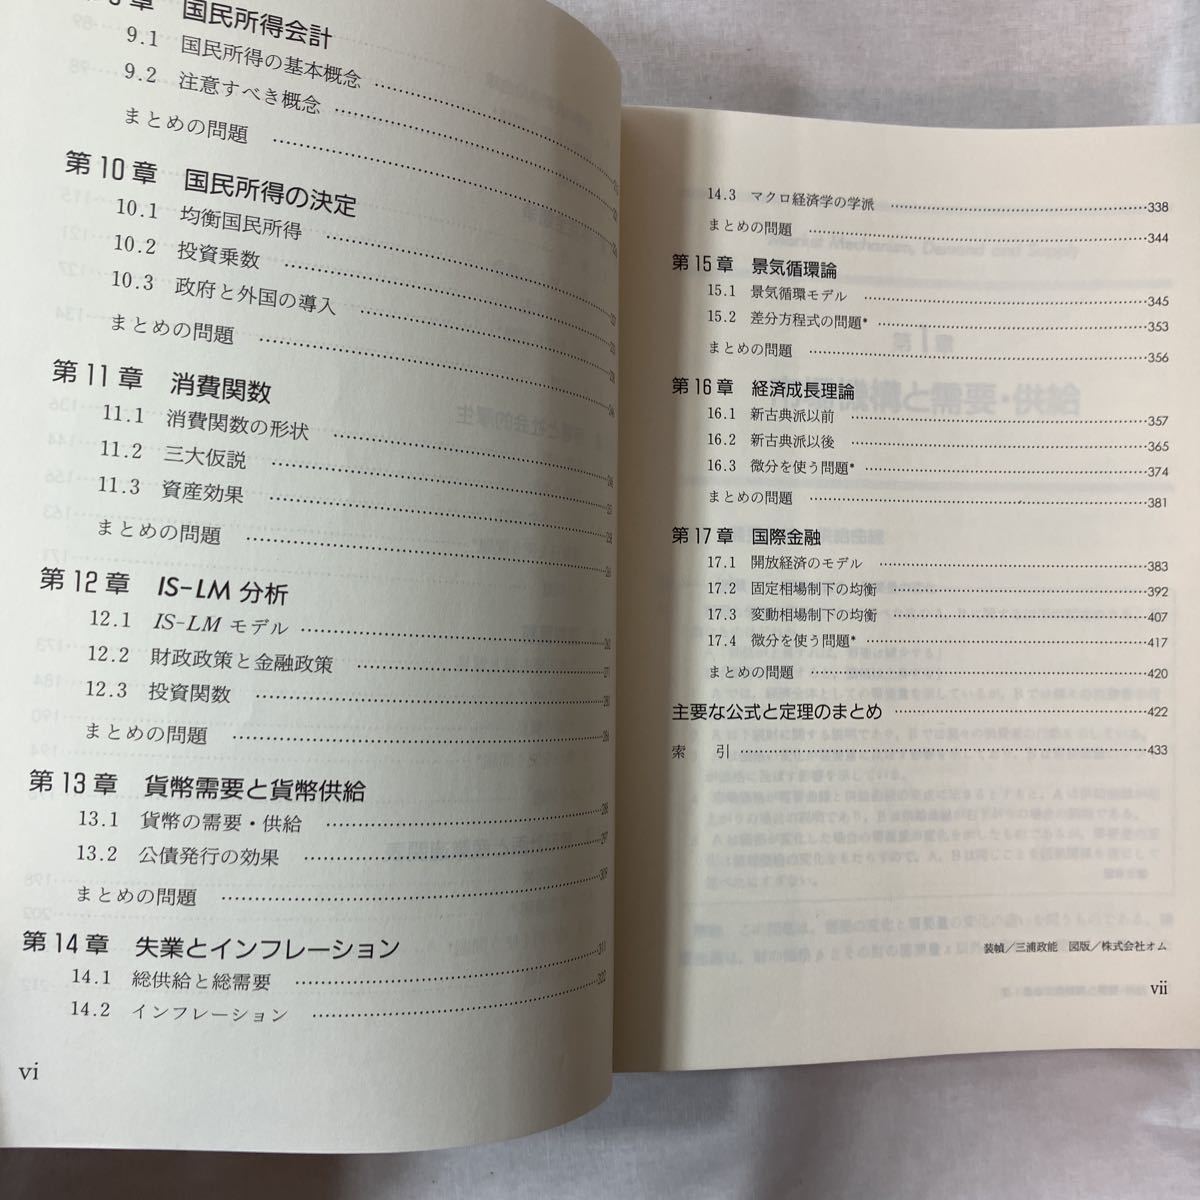 zaa-449♪入門 経済学ゼミナール 単行本 1991/5/1 西村 和雄 (著) 実務教育出版 (1990/4/1)